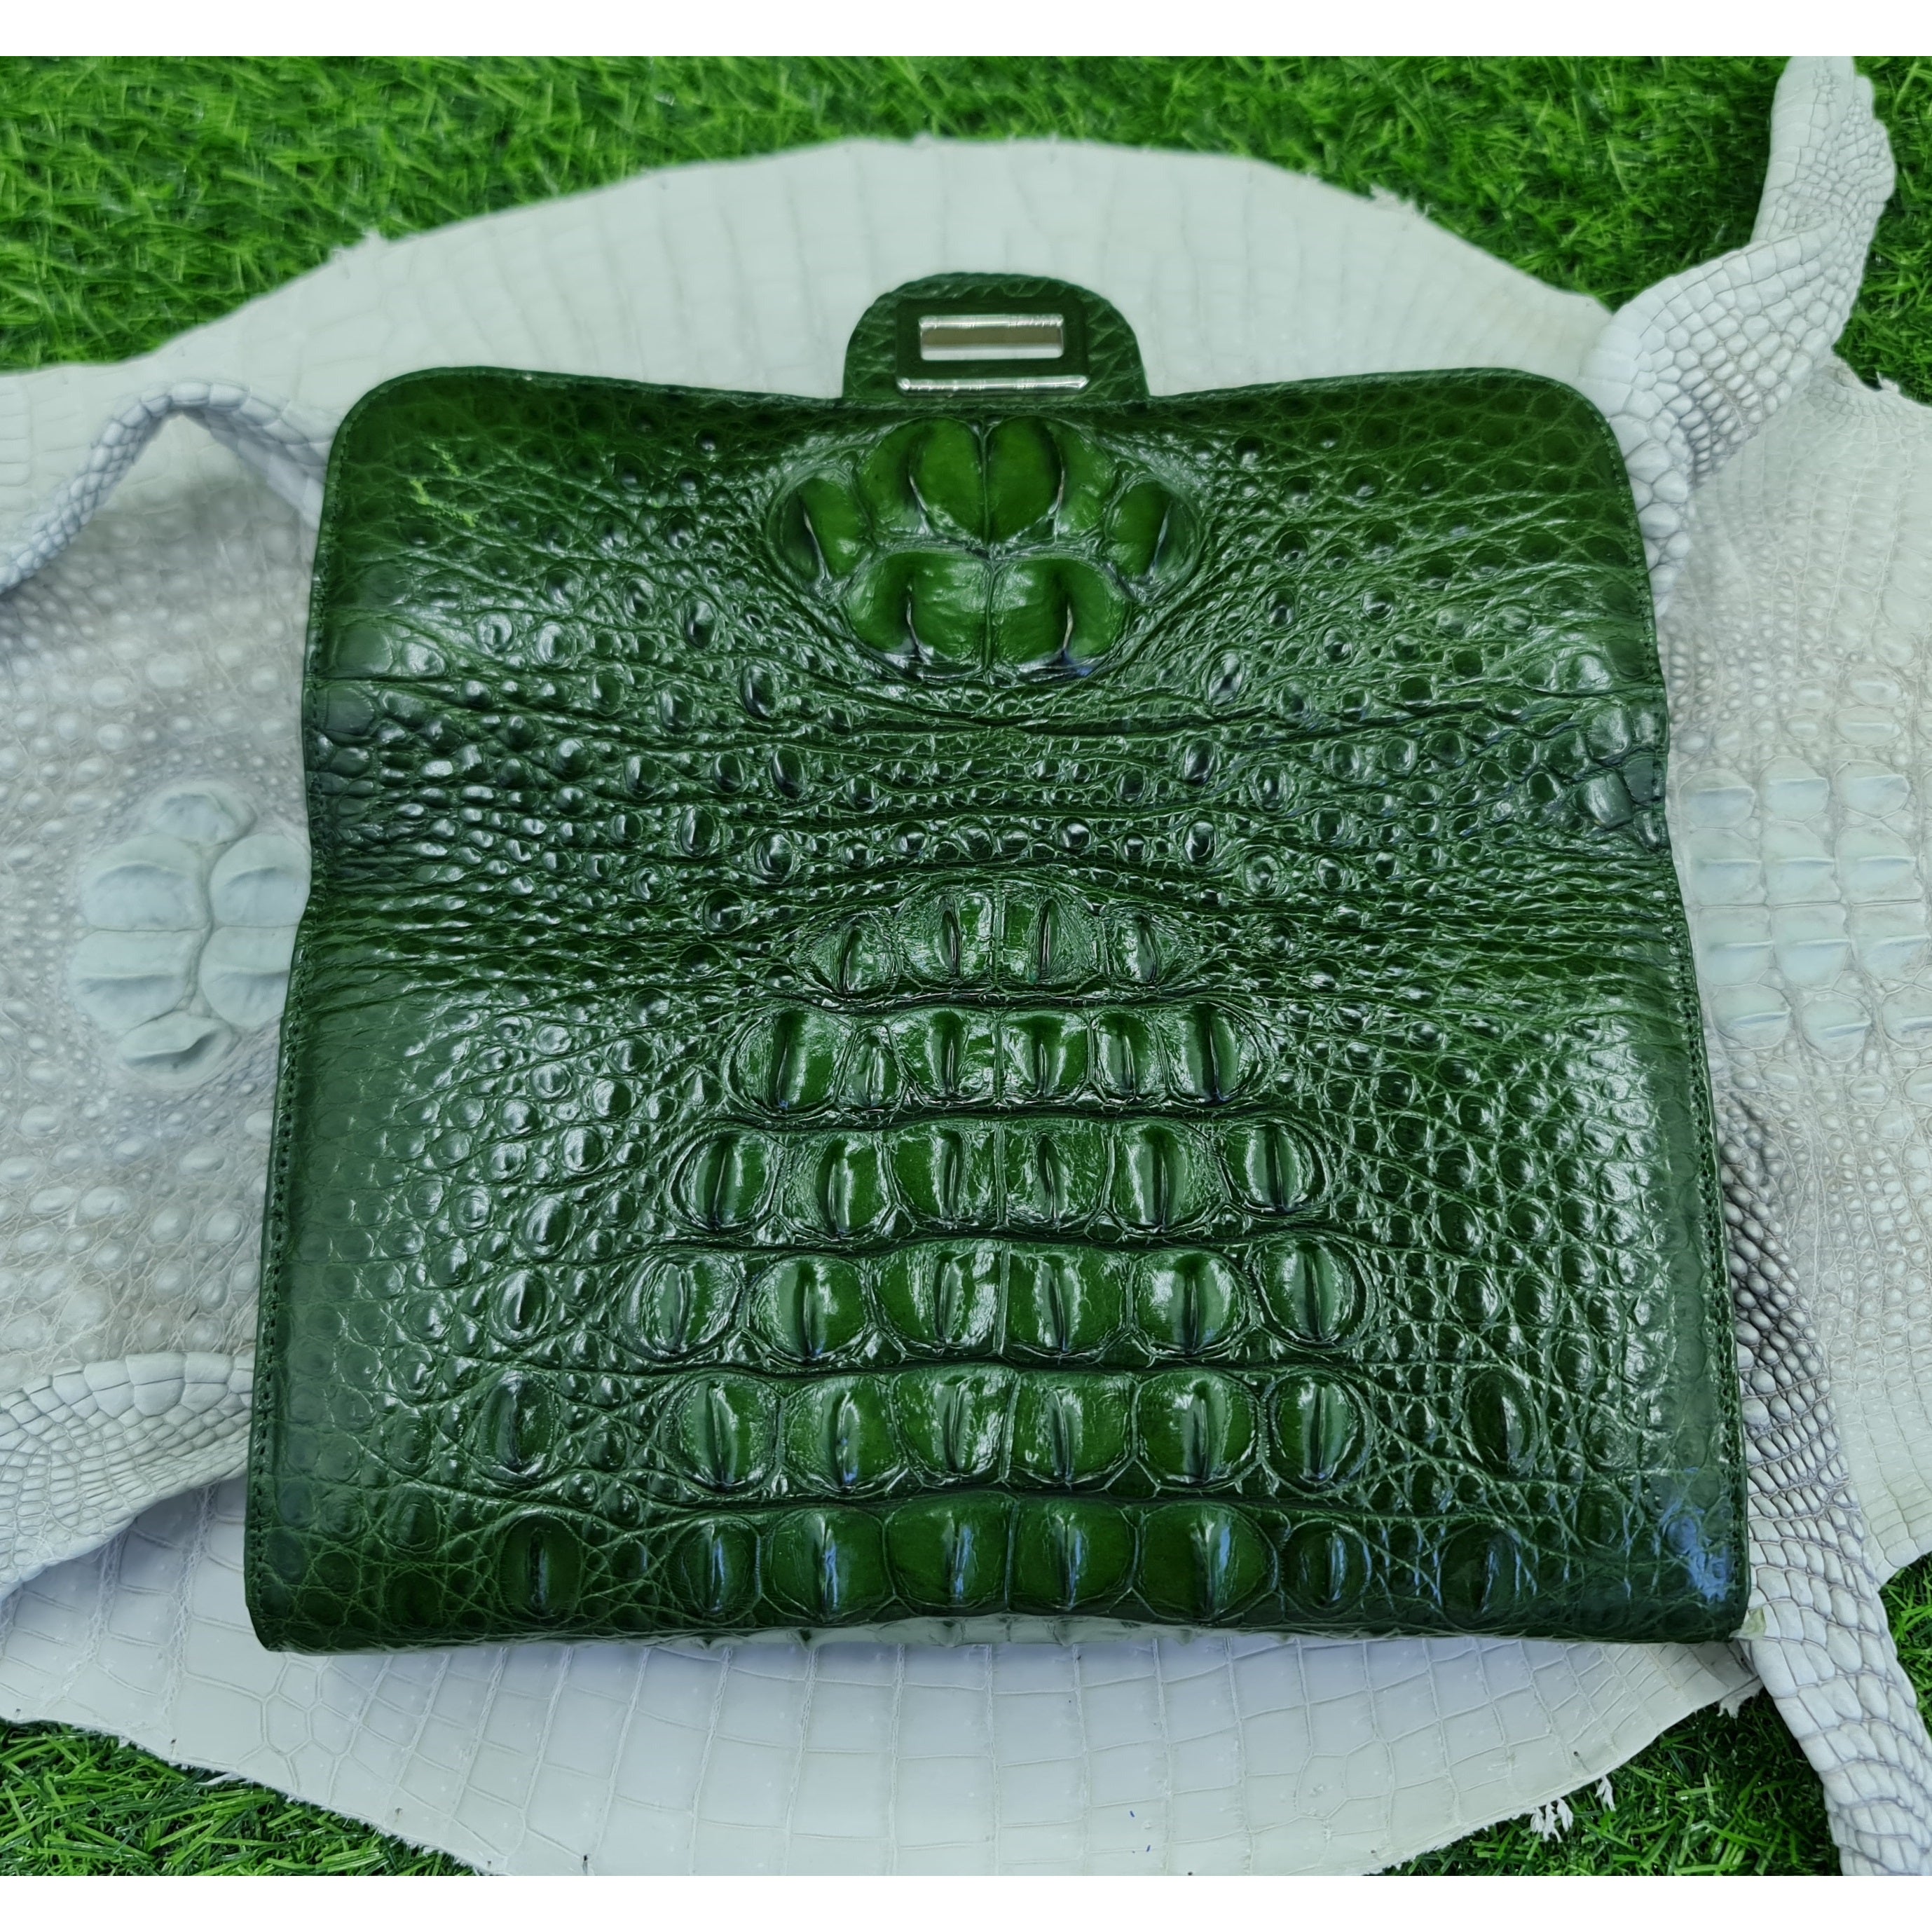 Green Leather Alligator Handbag Women Handmade Luxury Leather Bag - Work Bag Women - Leather Satchel Purse BAG-GRE-06